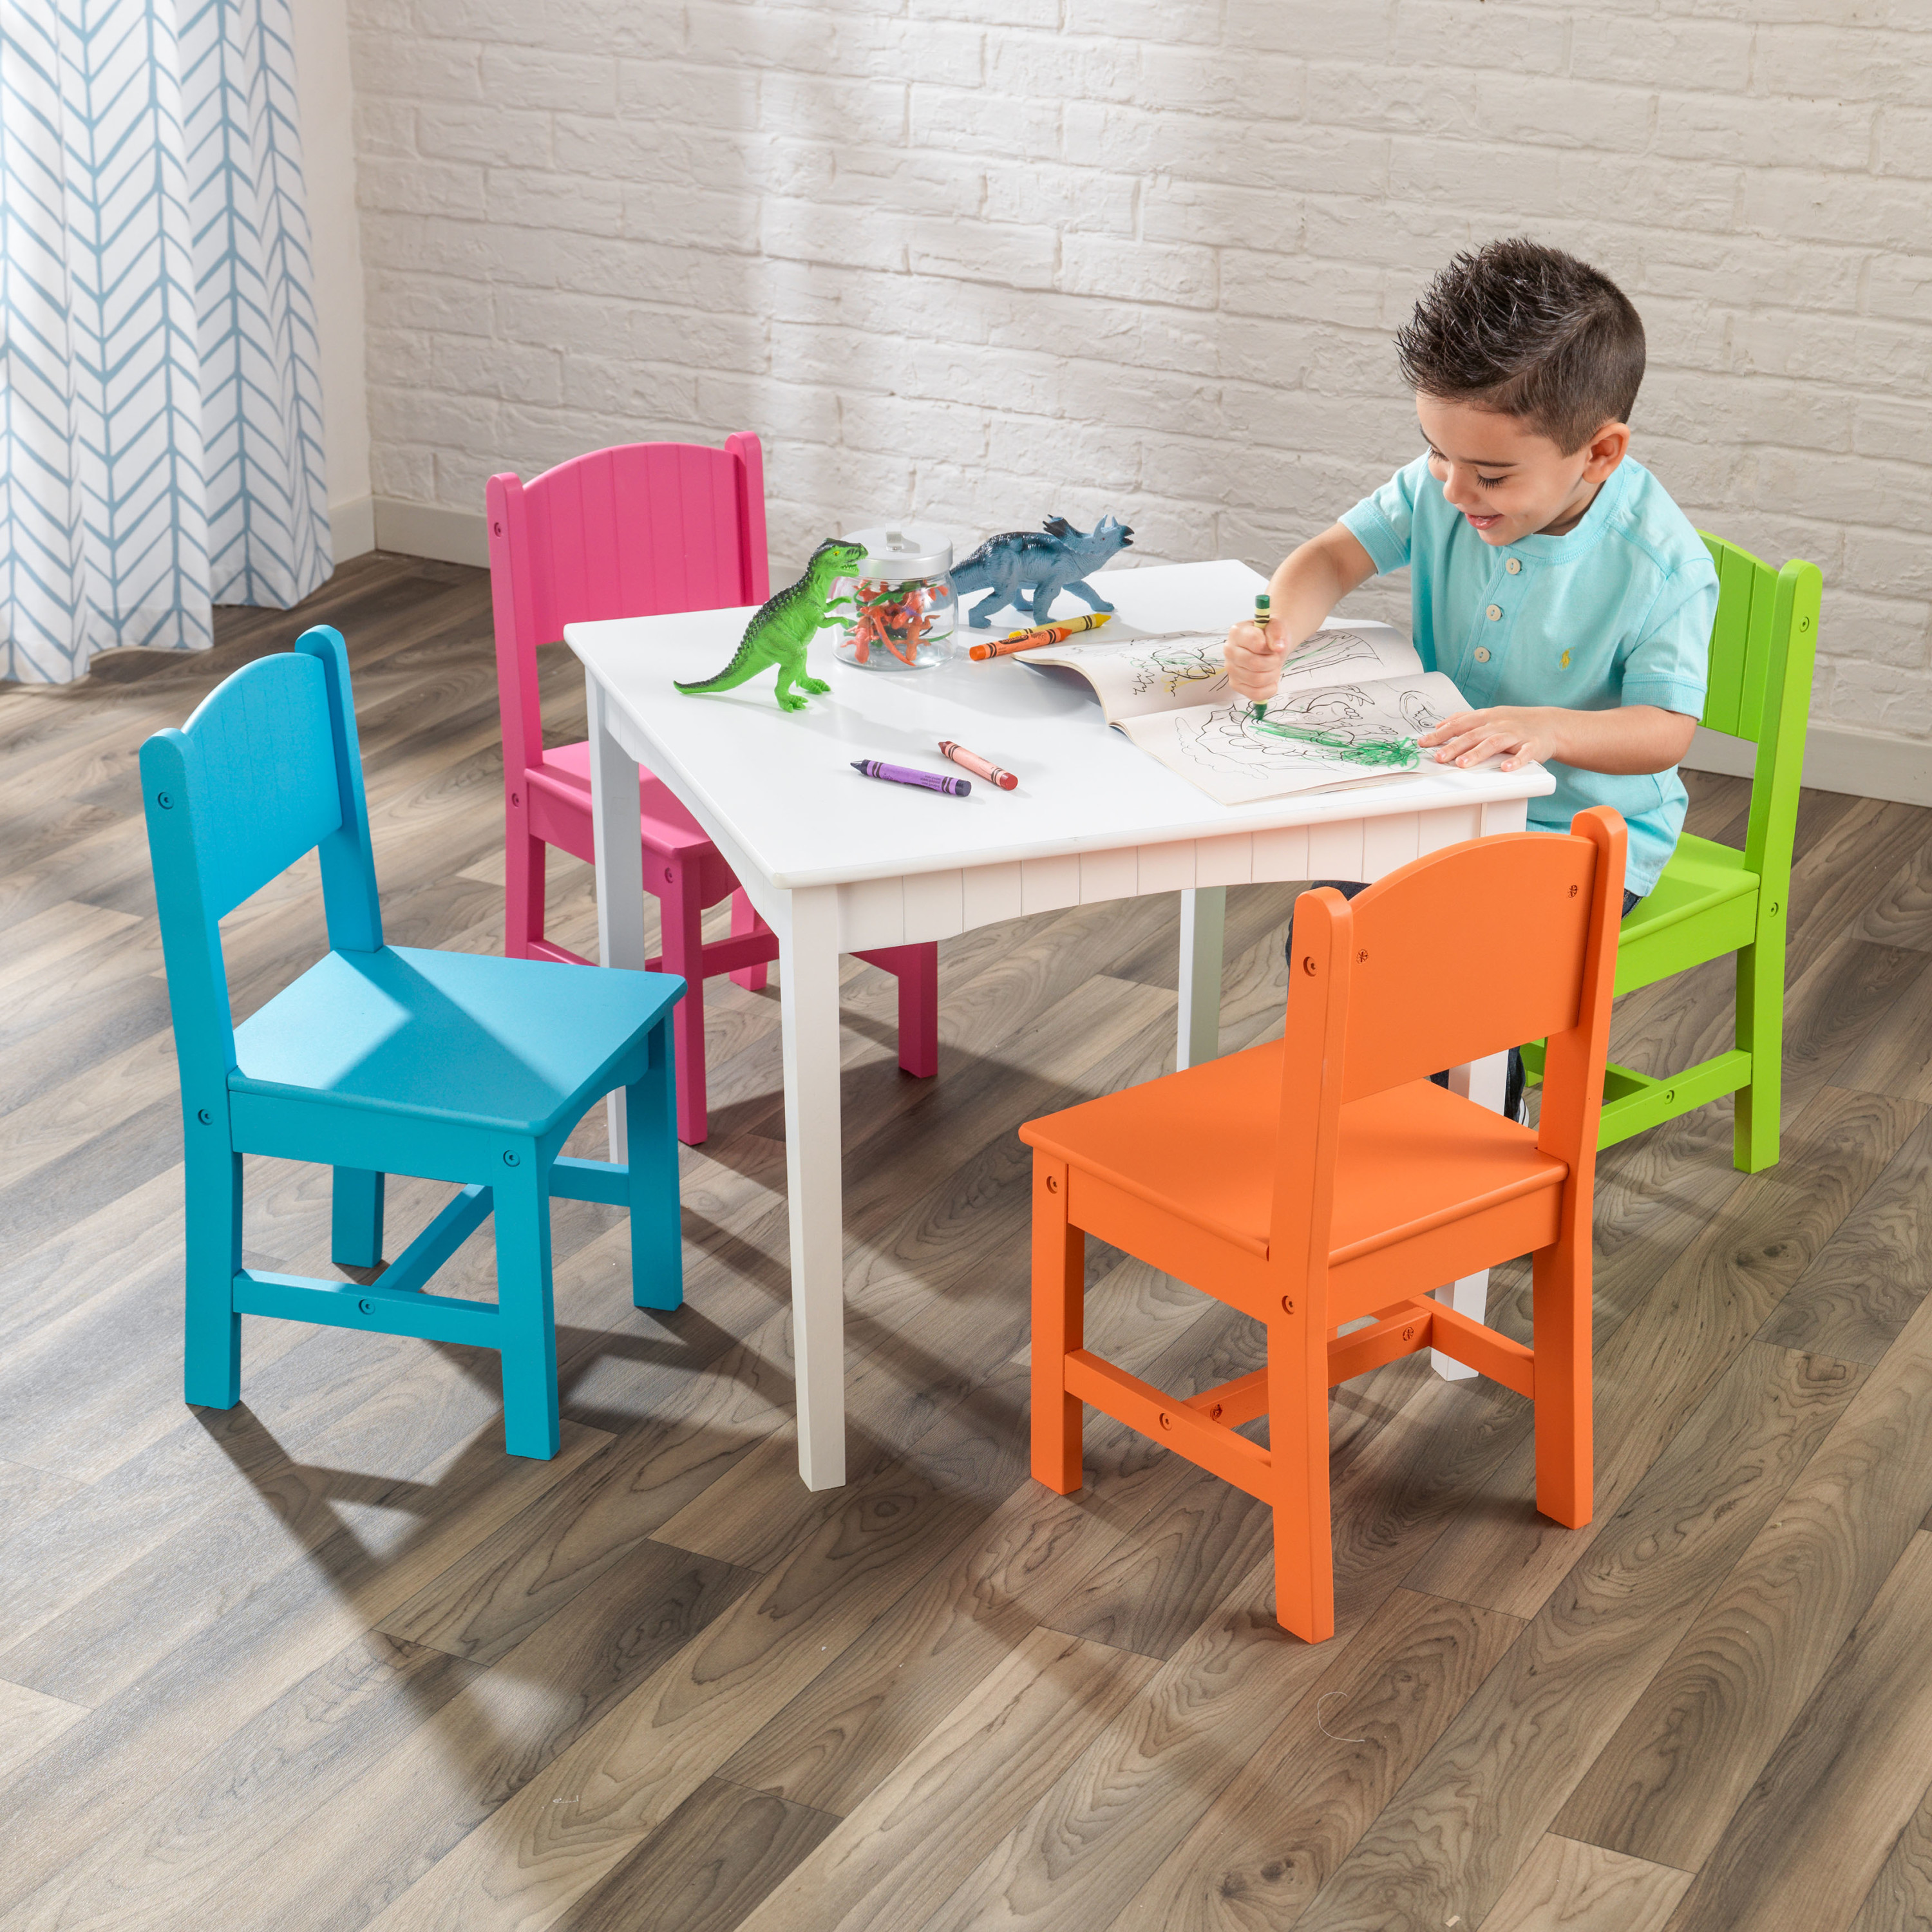 KidKraft Nantucket Table & 4 Chair Set, Bright - image 2 of 6